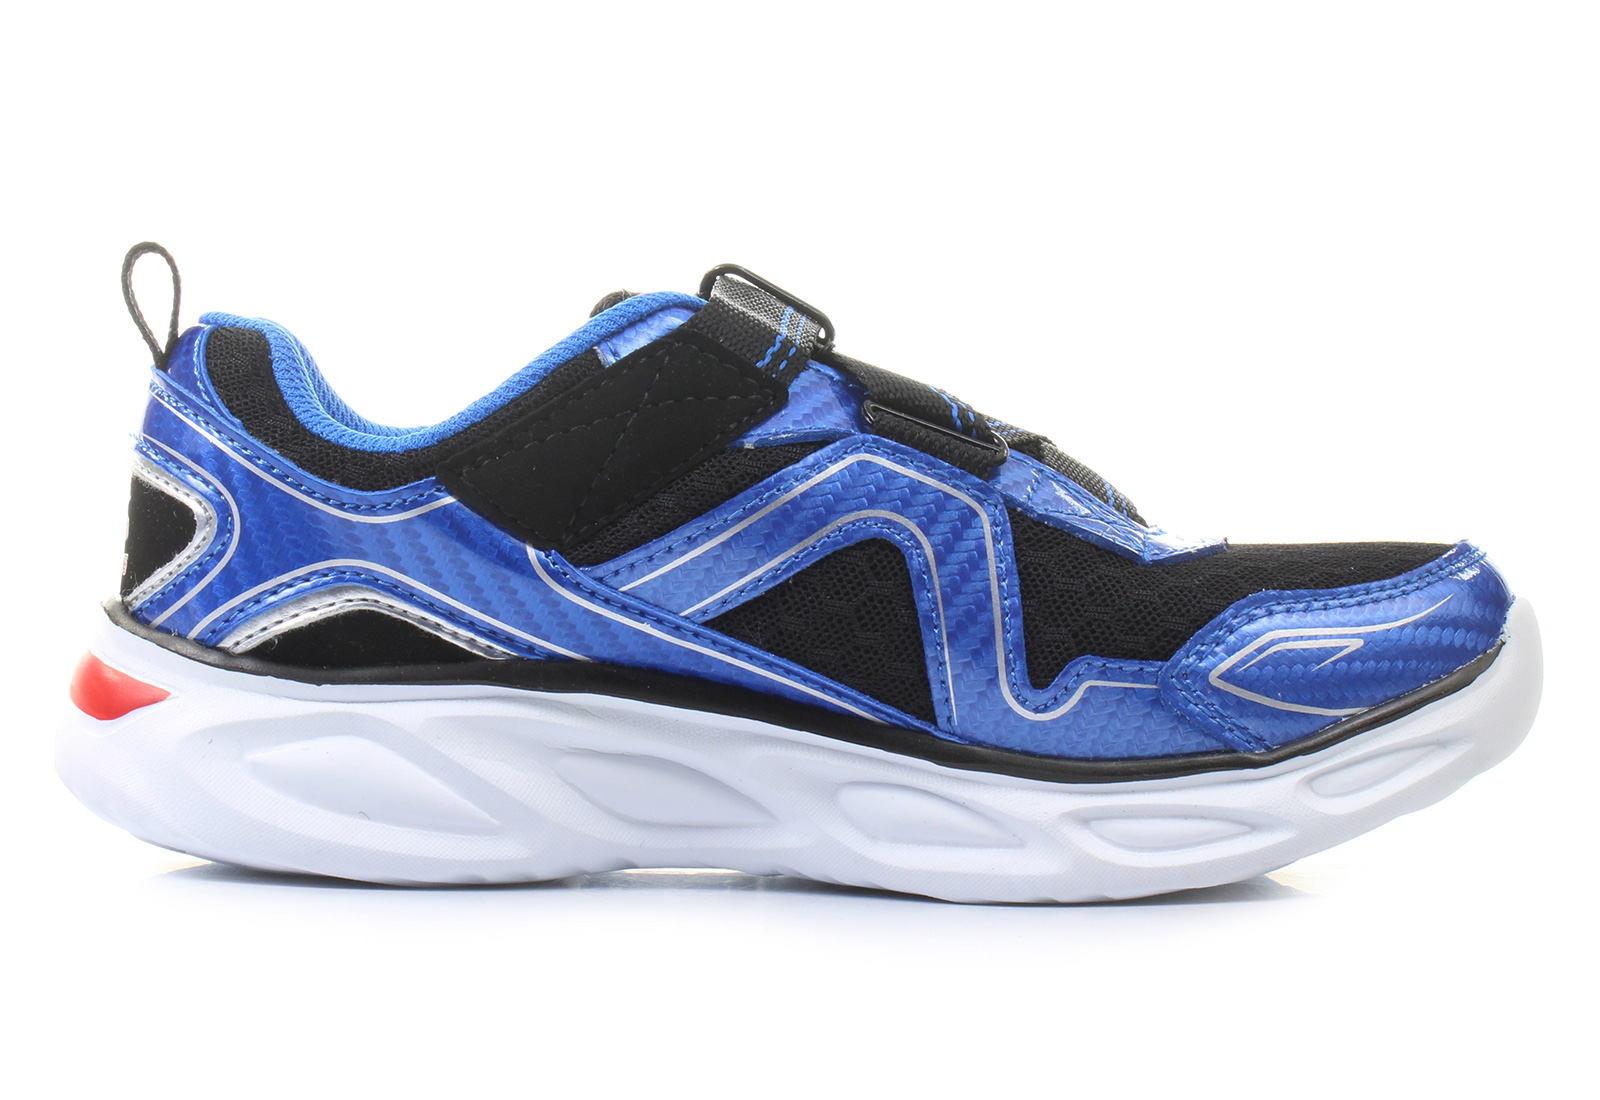 Skechers Shoes - Ipox Light-up - 90385L-BLBK - Online shop for sneakers ...